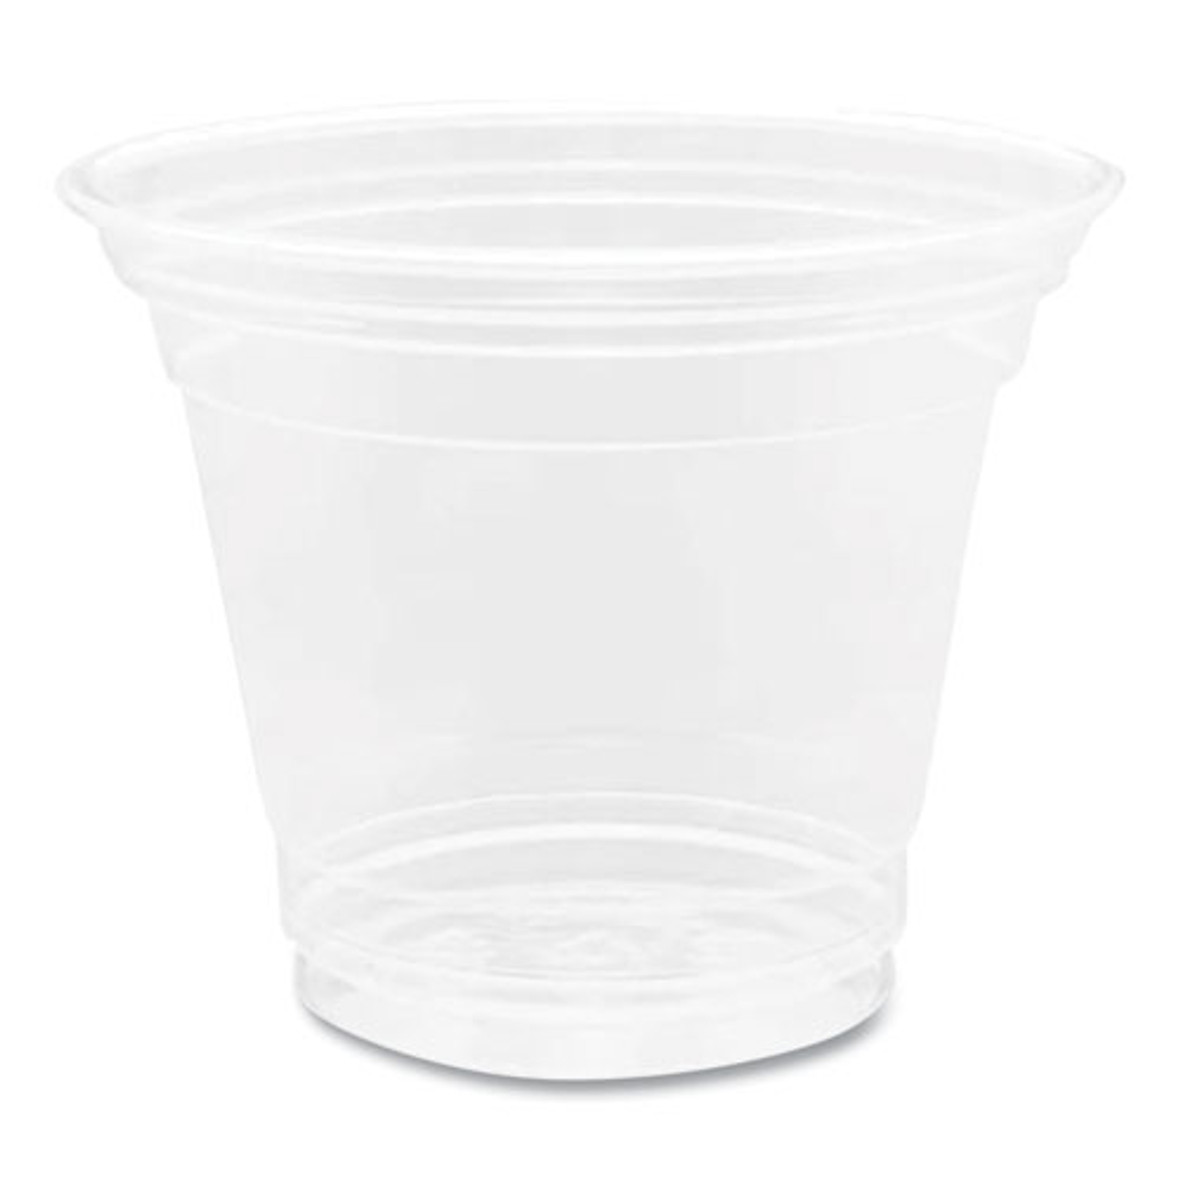 Karat PET Plastic Cups, 9 Oz, Clear, 1,000/carton